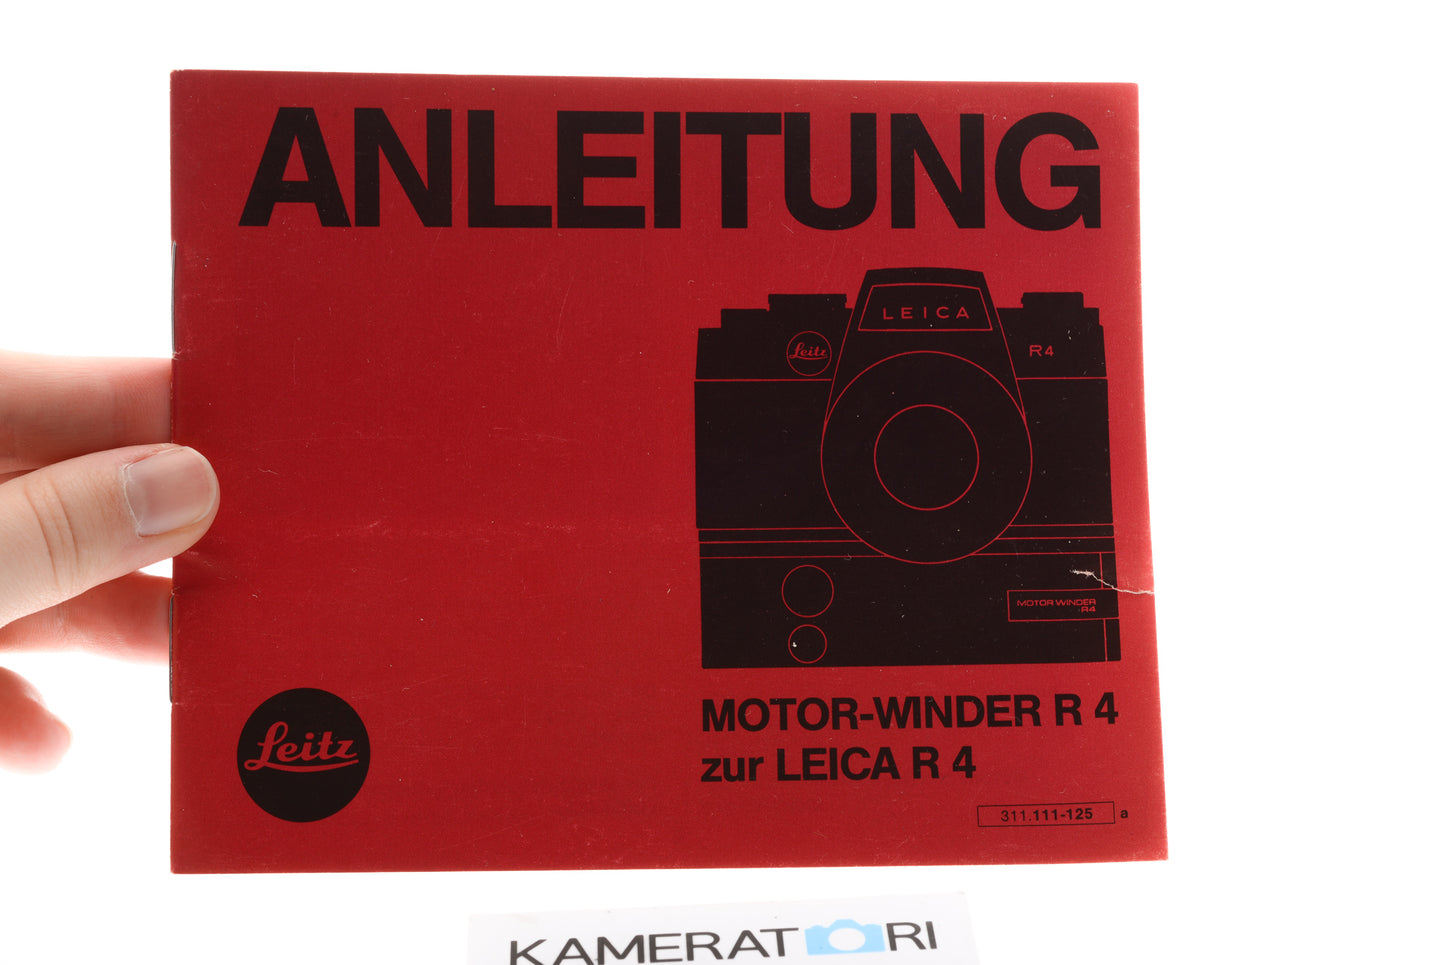 Leica Motor-Winder R4 for Leica R4 Anleitung